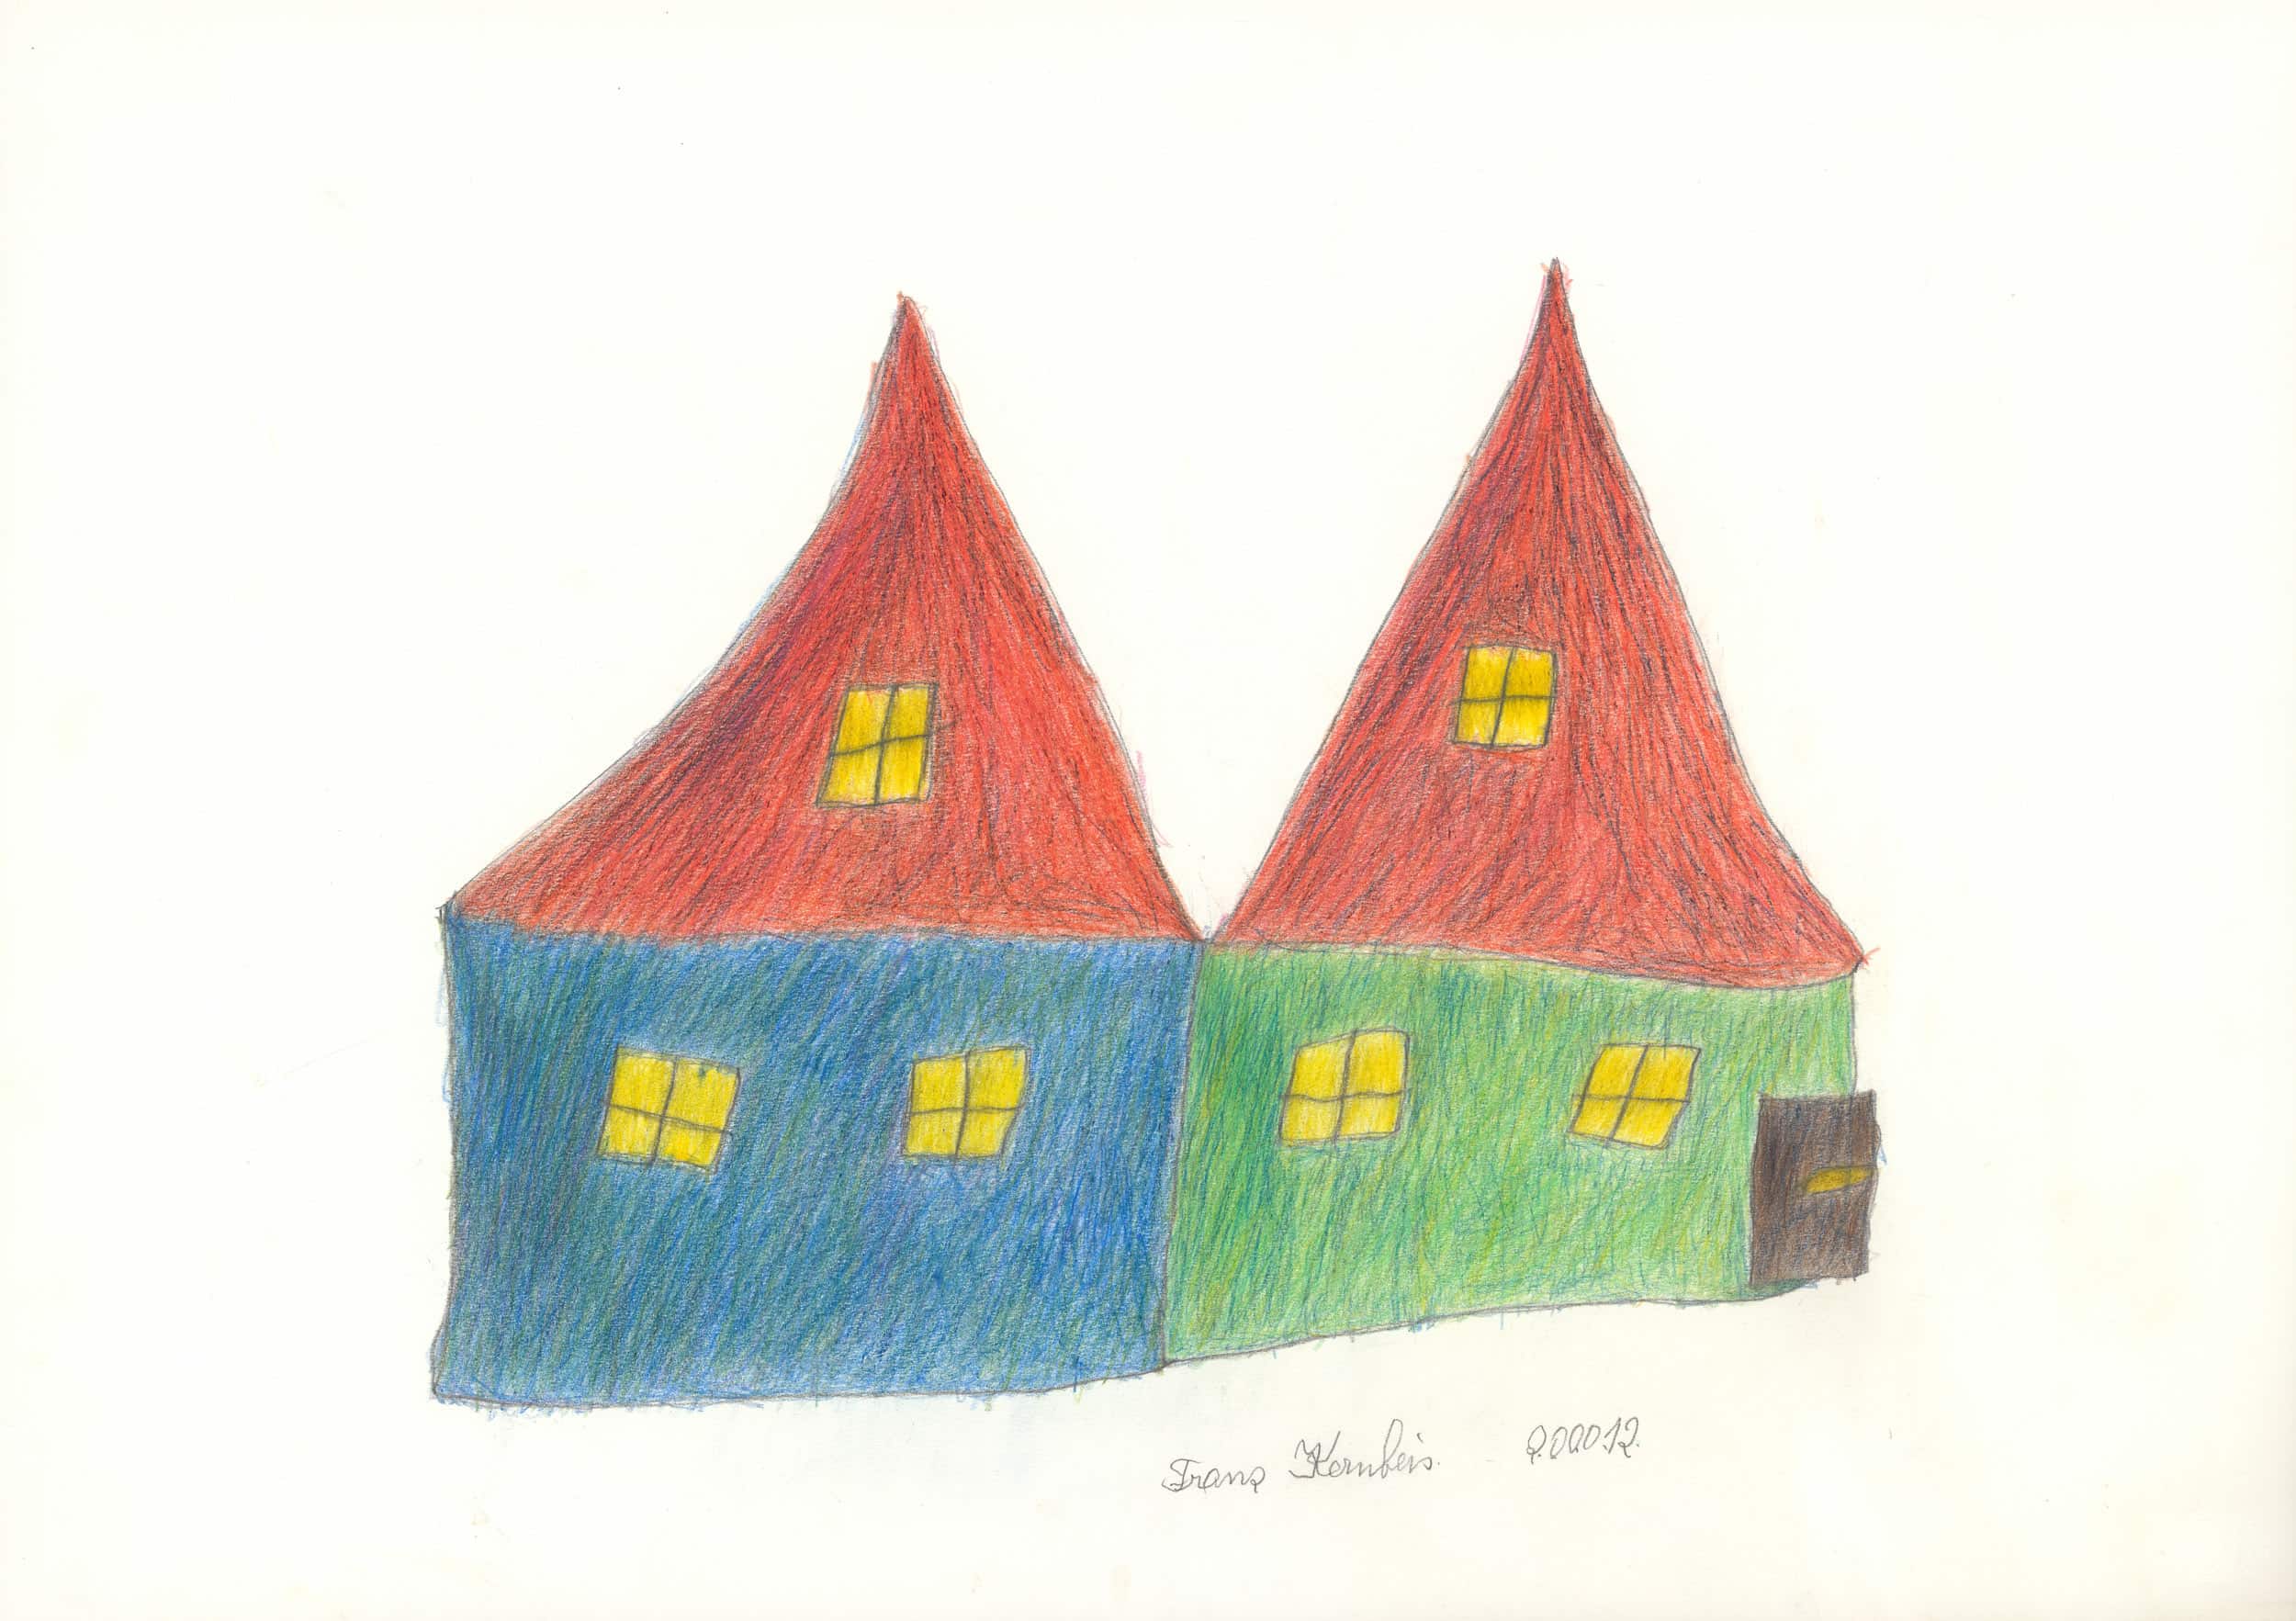 kernbeis franz - Zwei Häuser / Two houses